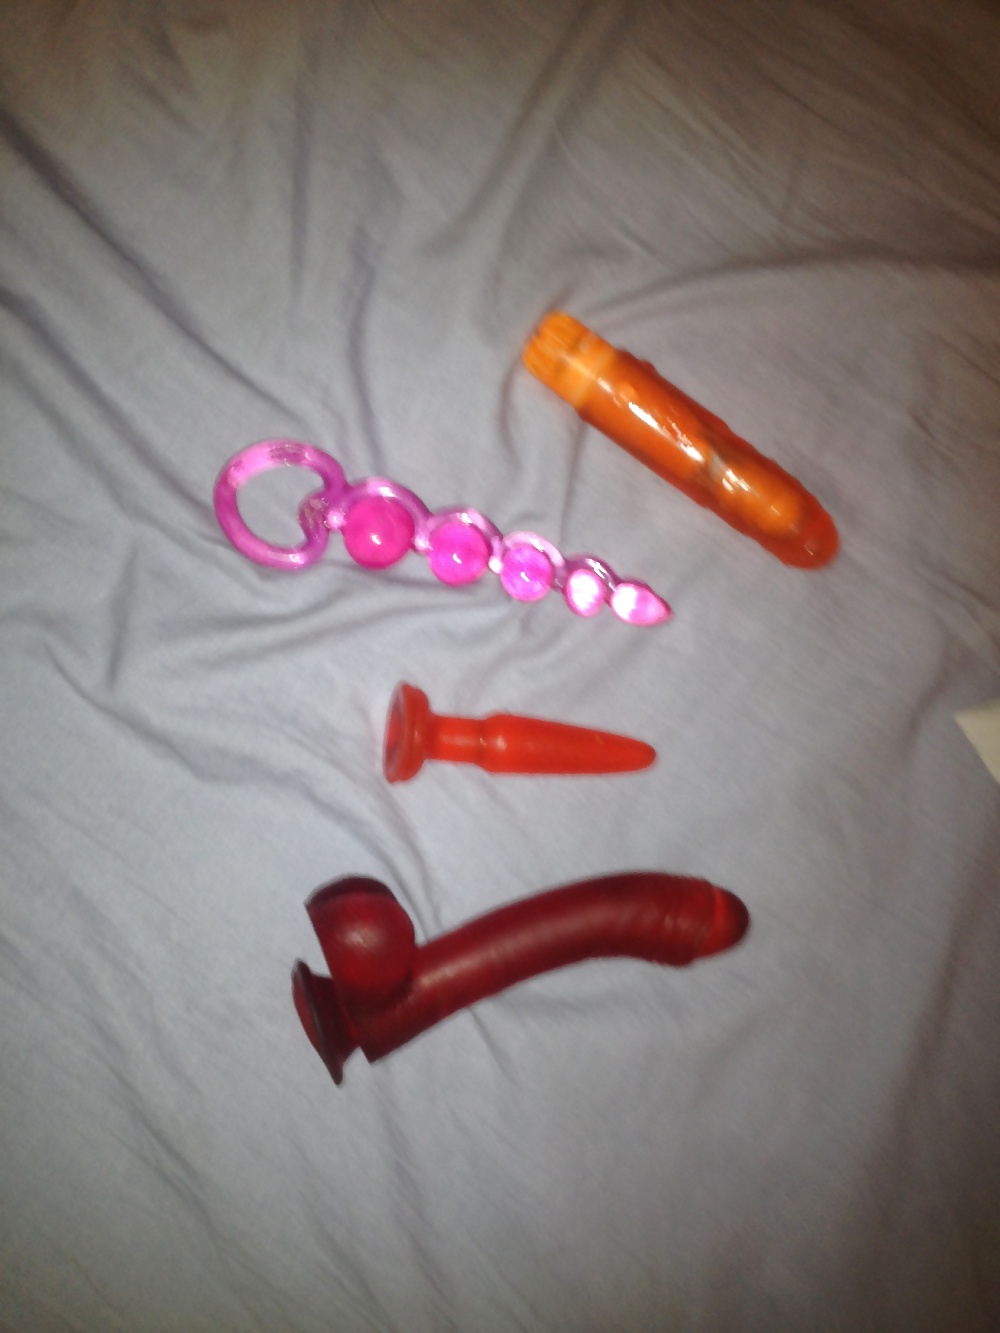 Gf's toys and panties  #40415487